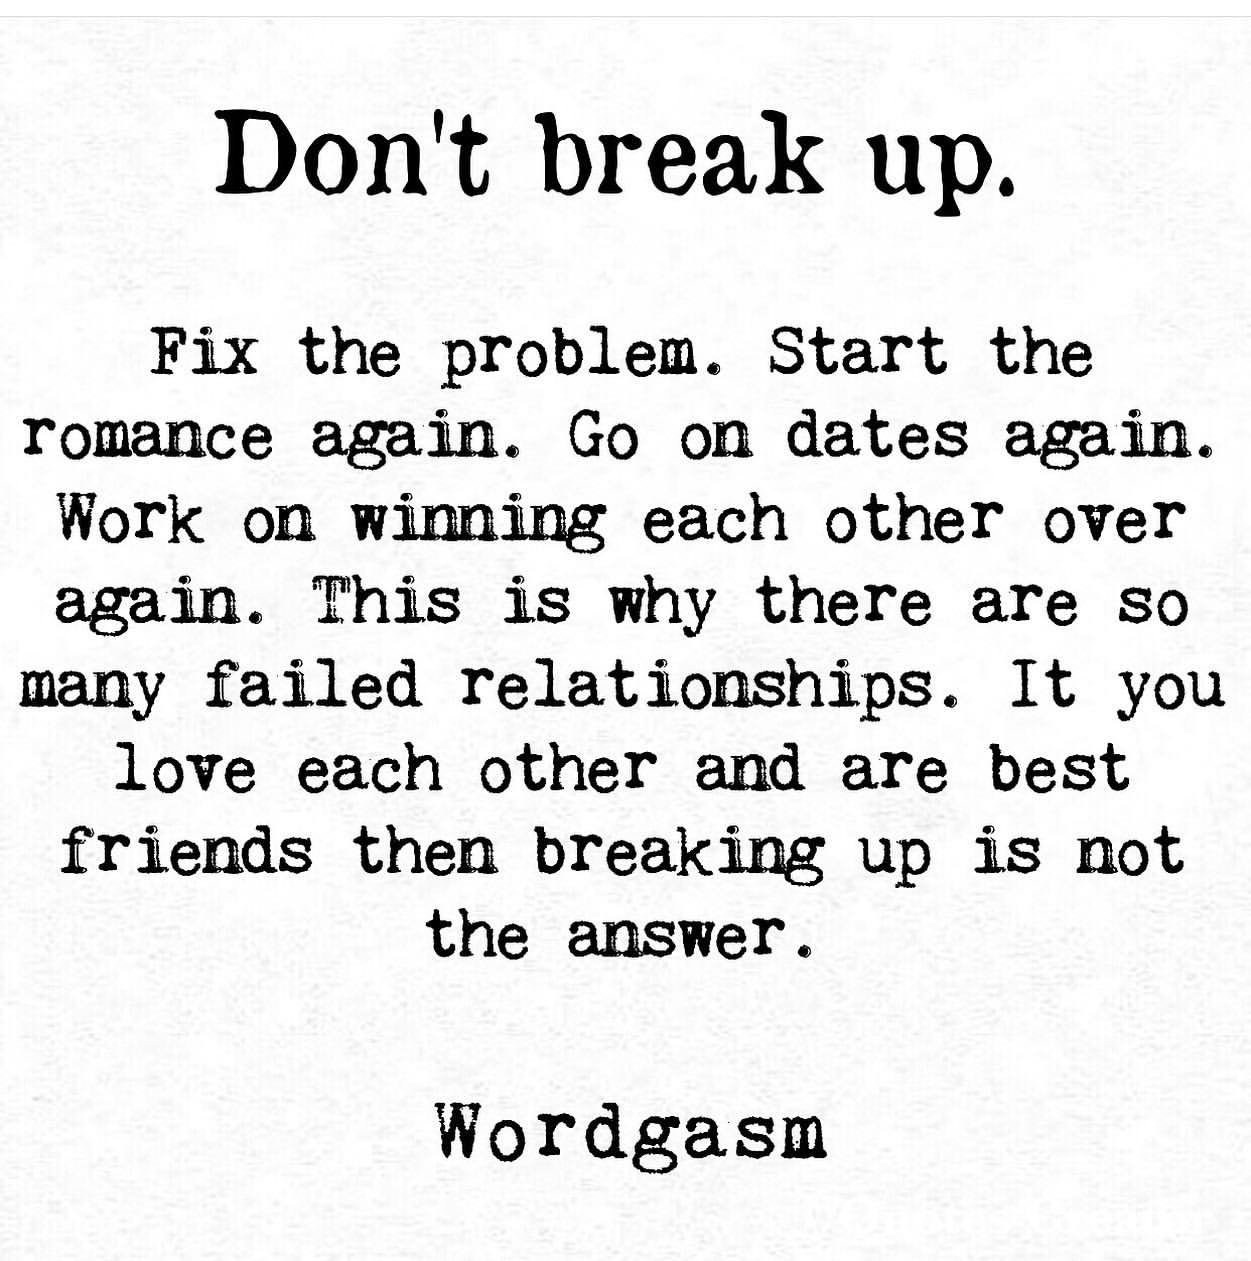 Don't break up. Fix the problem. Start the romance again. Go on dates